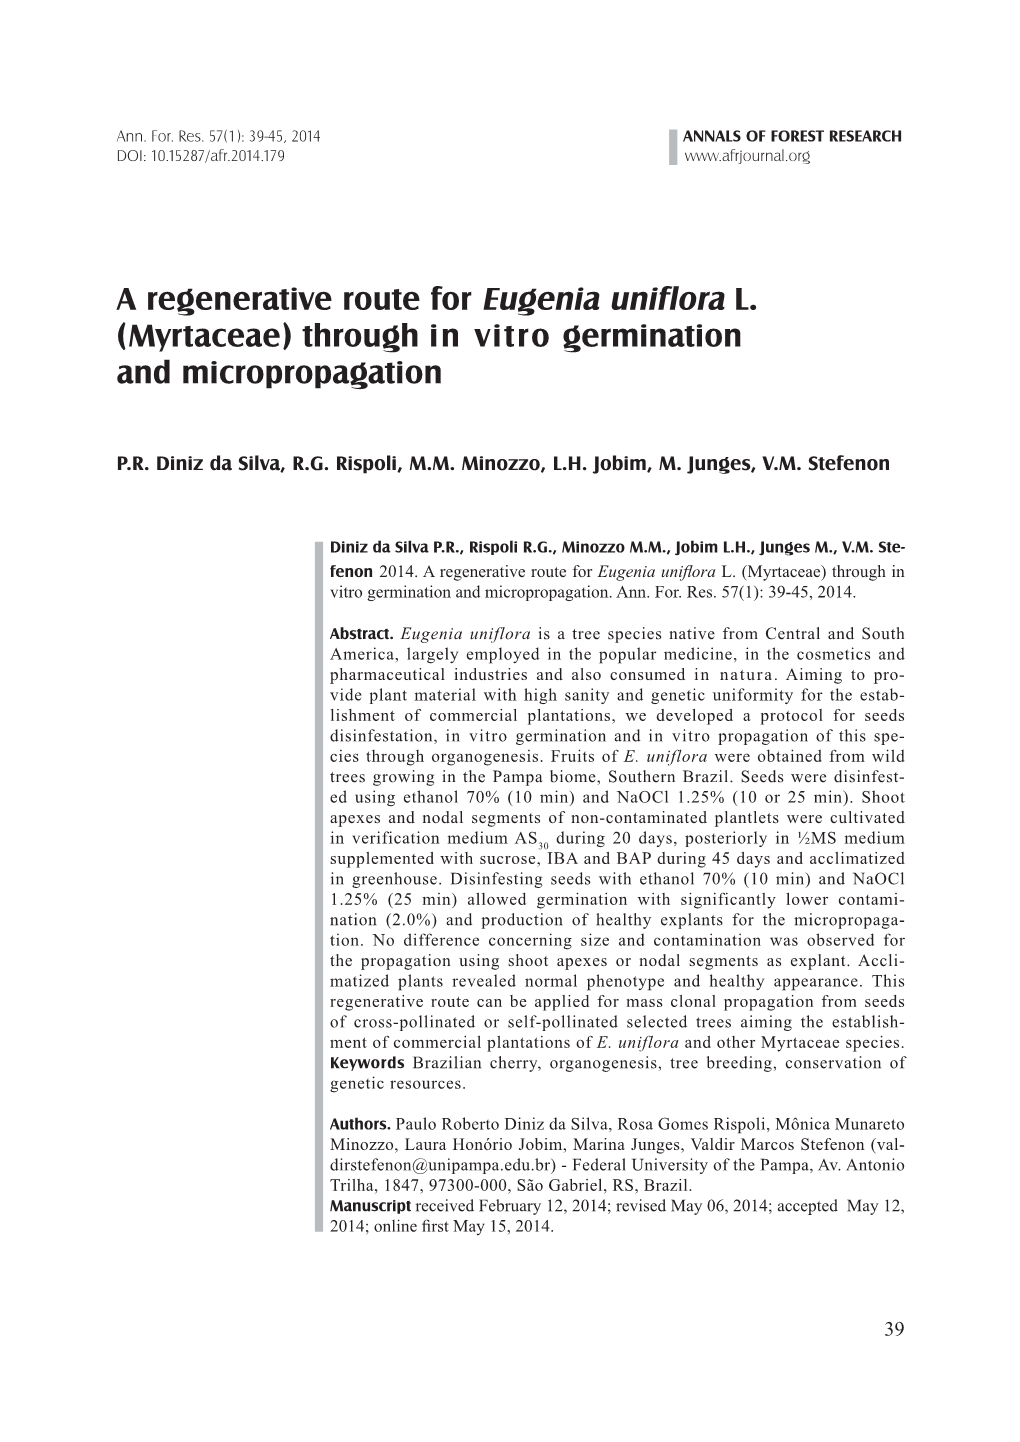 A Regenerative Route for Eugenia Uniflora L. (Myrtaceae) Through in Vitro Germination and Micropropagation